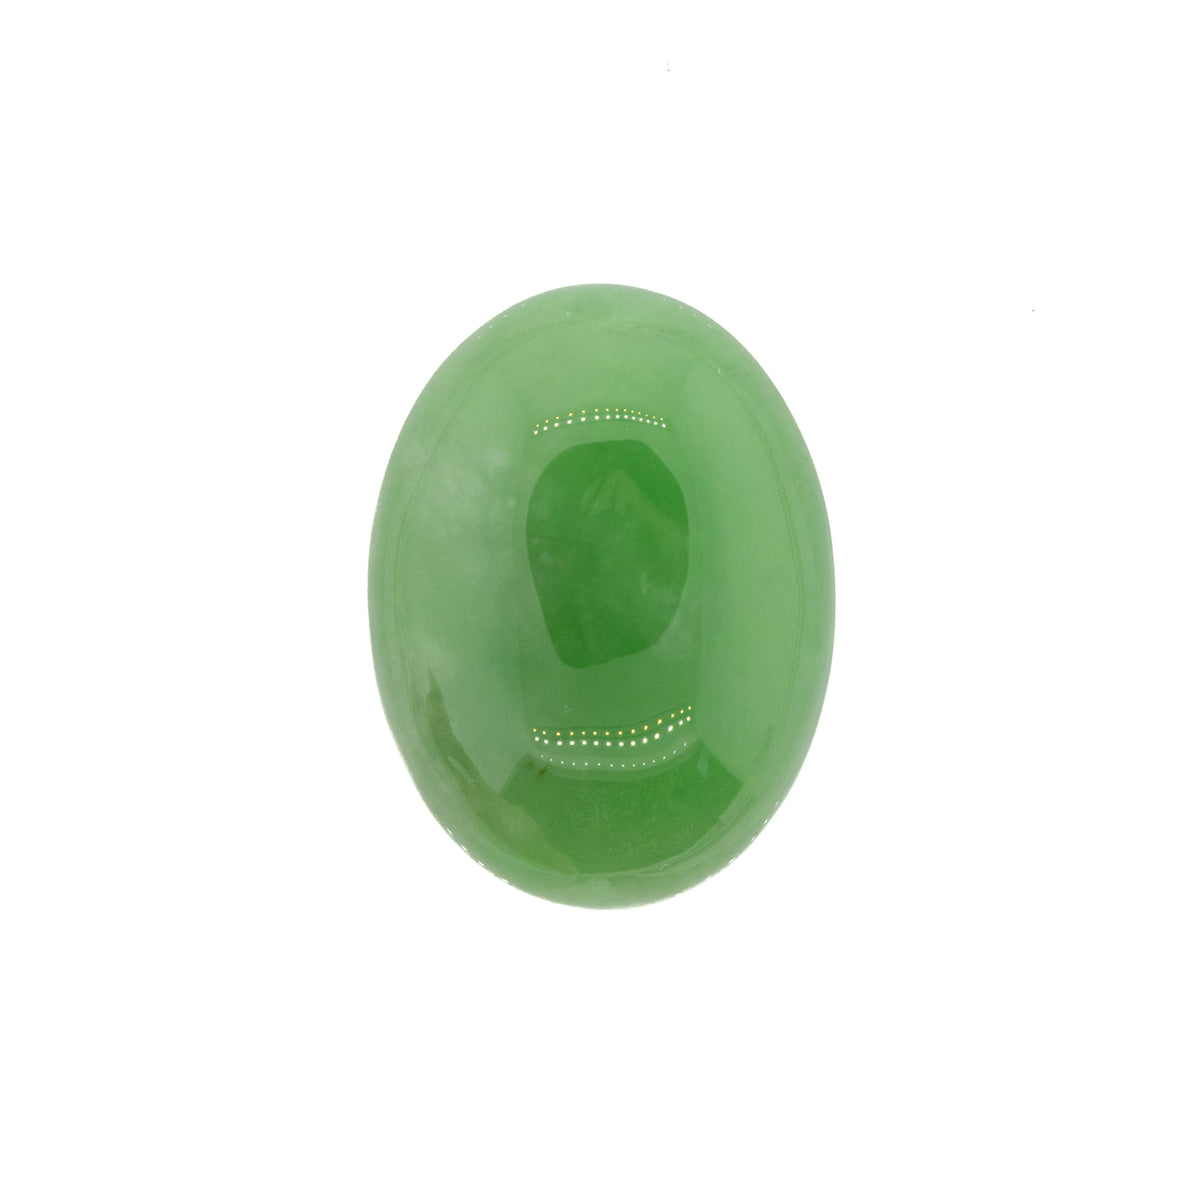 8.26ct Oval Cabochon Cut Mottled Apple Green Jadeite Jade